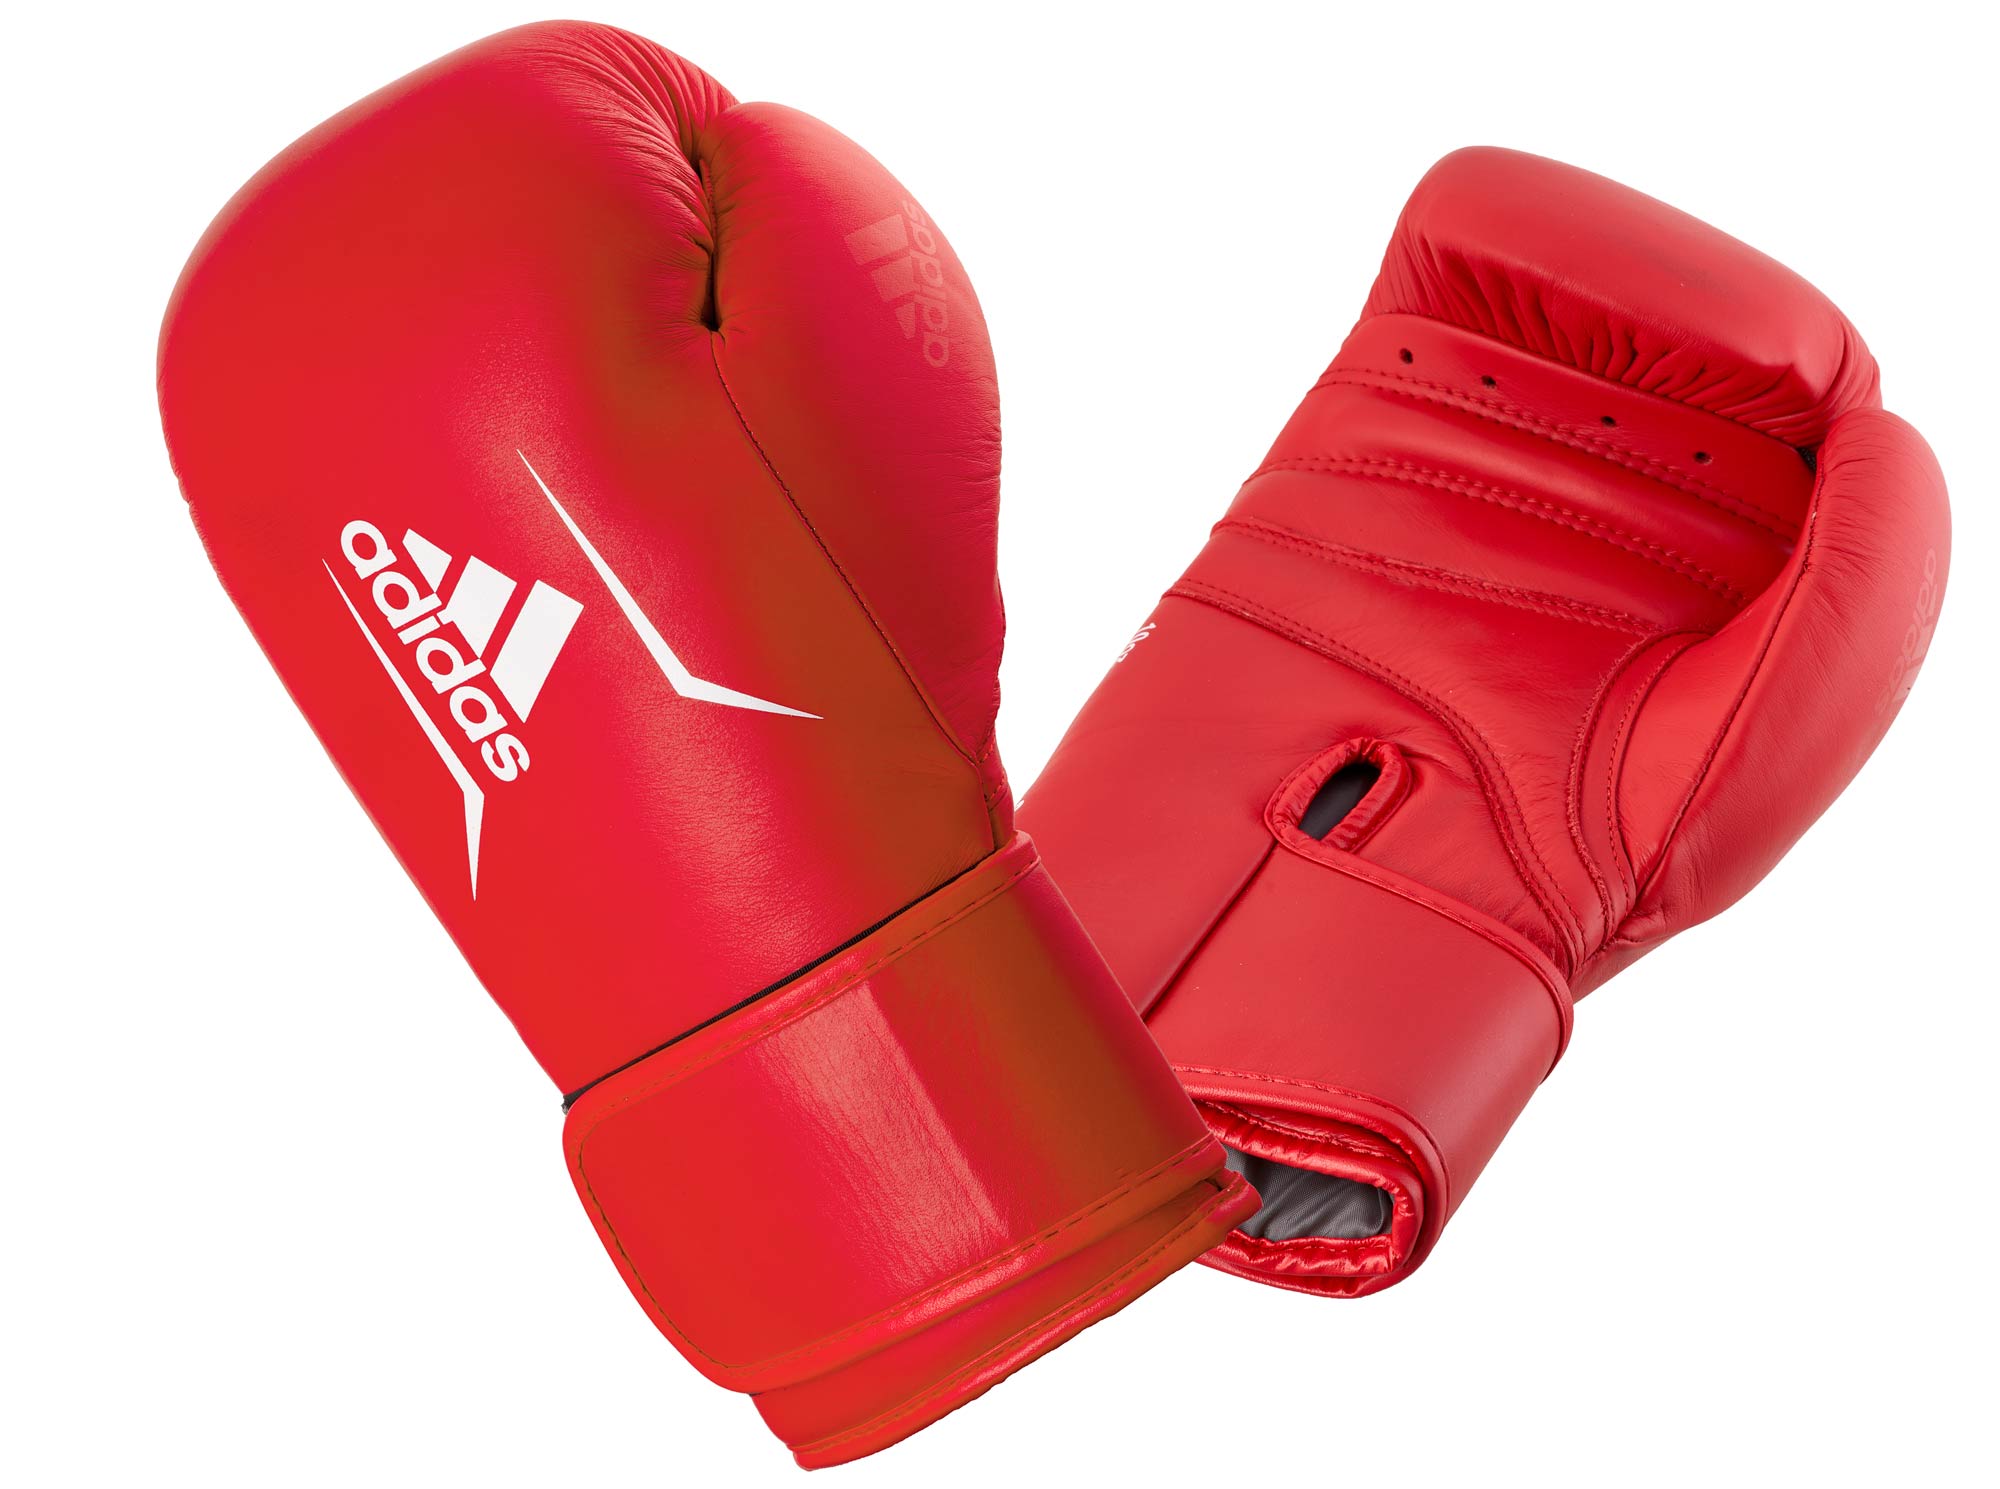  adidas boxing glove Speed 175 adiSBG175 2.0, red/white